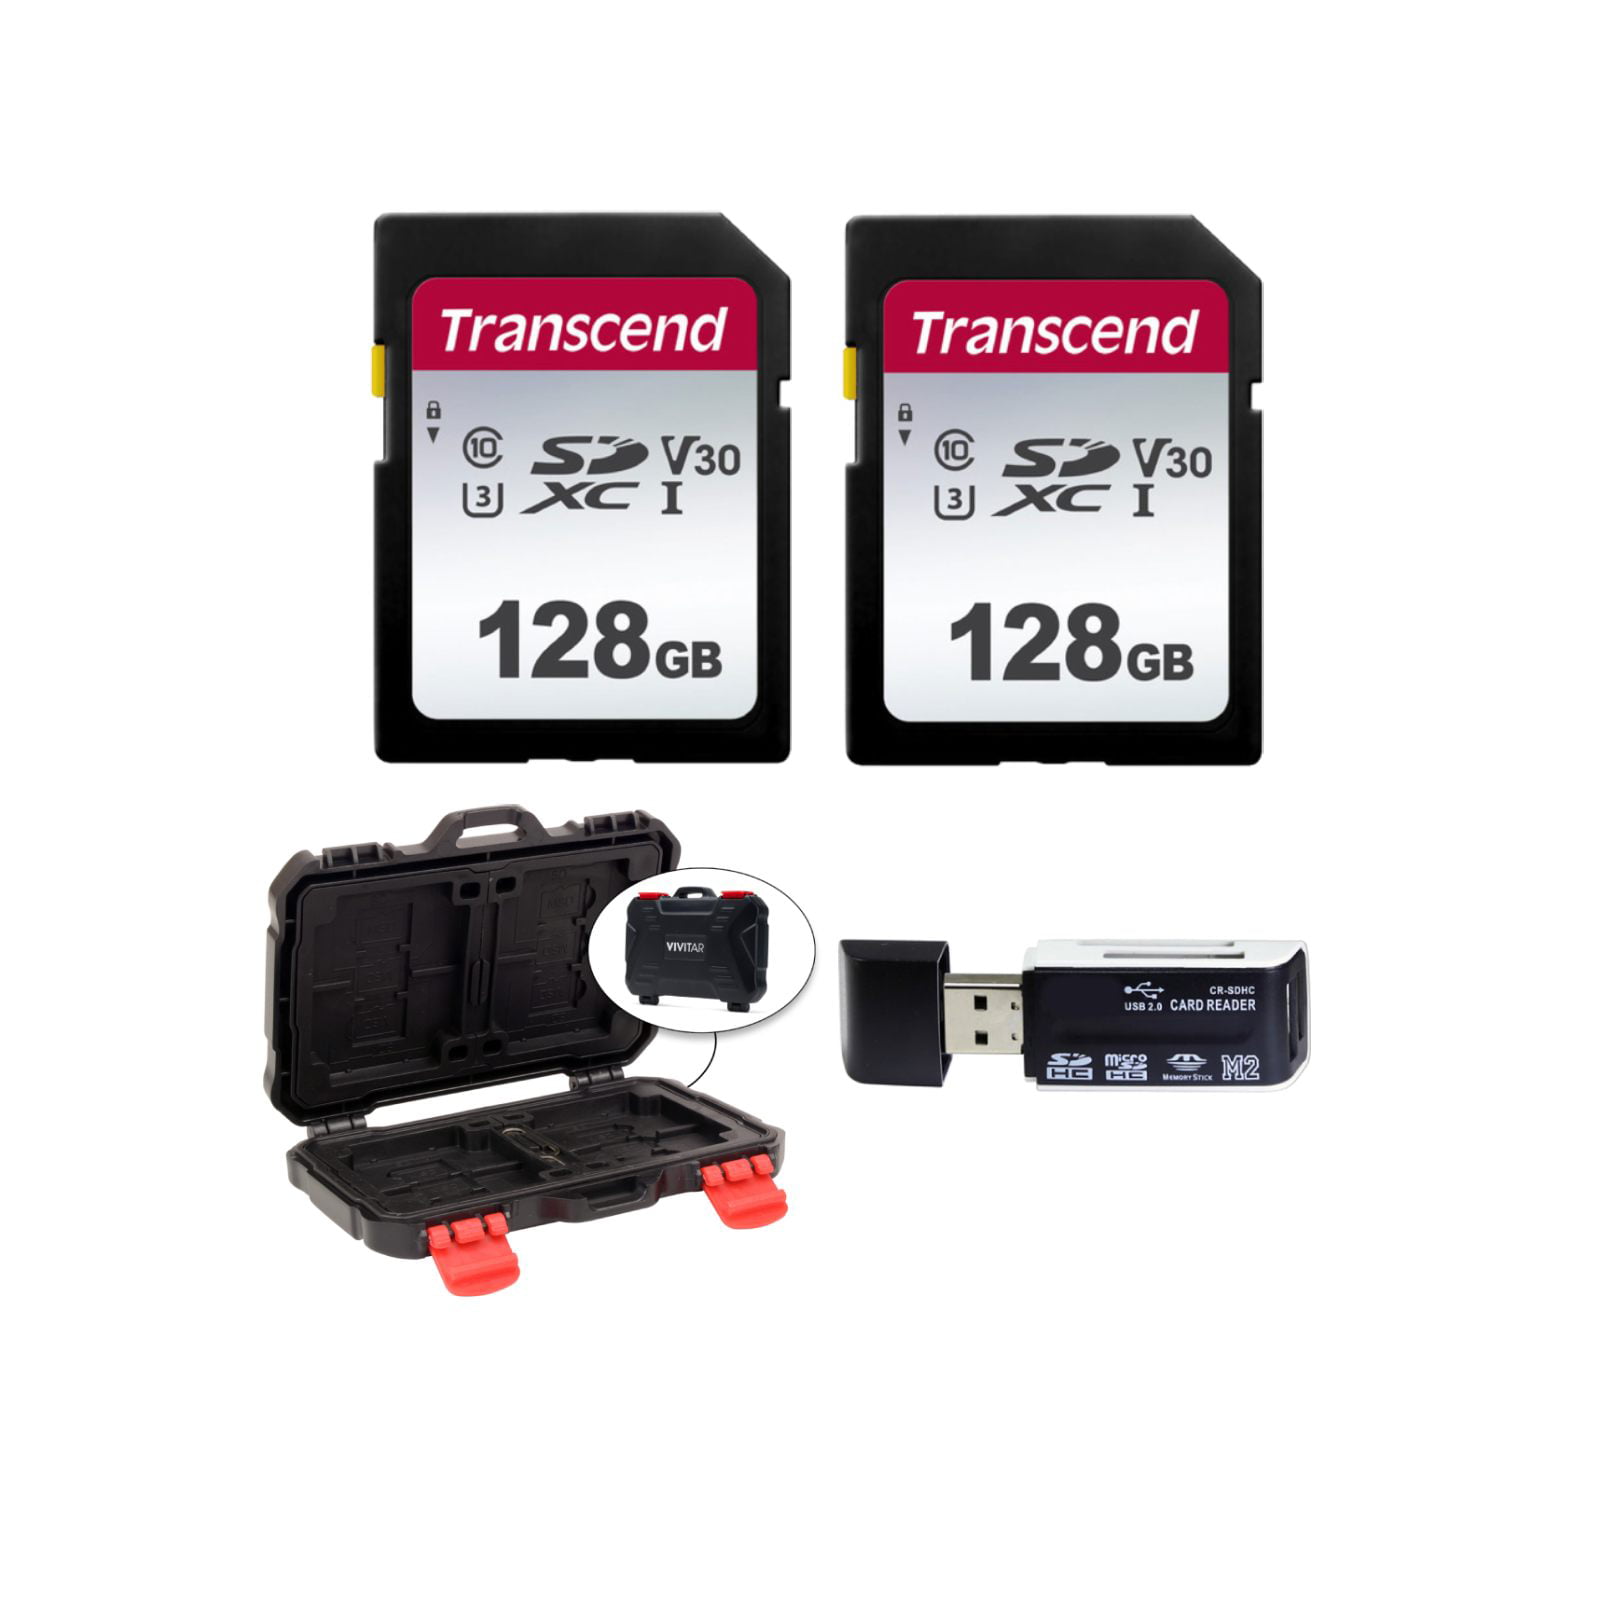 5 Pack Transcend TS8GSDHC10 5 x 8GB SDHC Class 10 Flash Memory Card